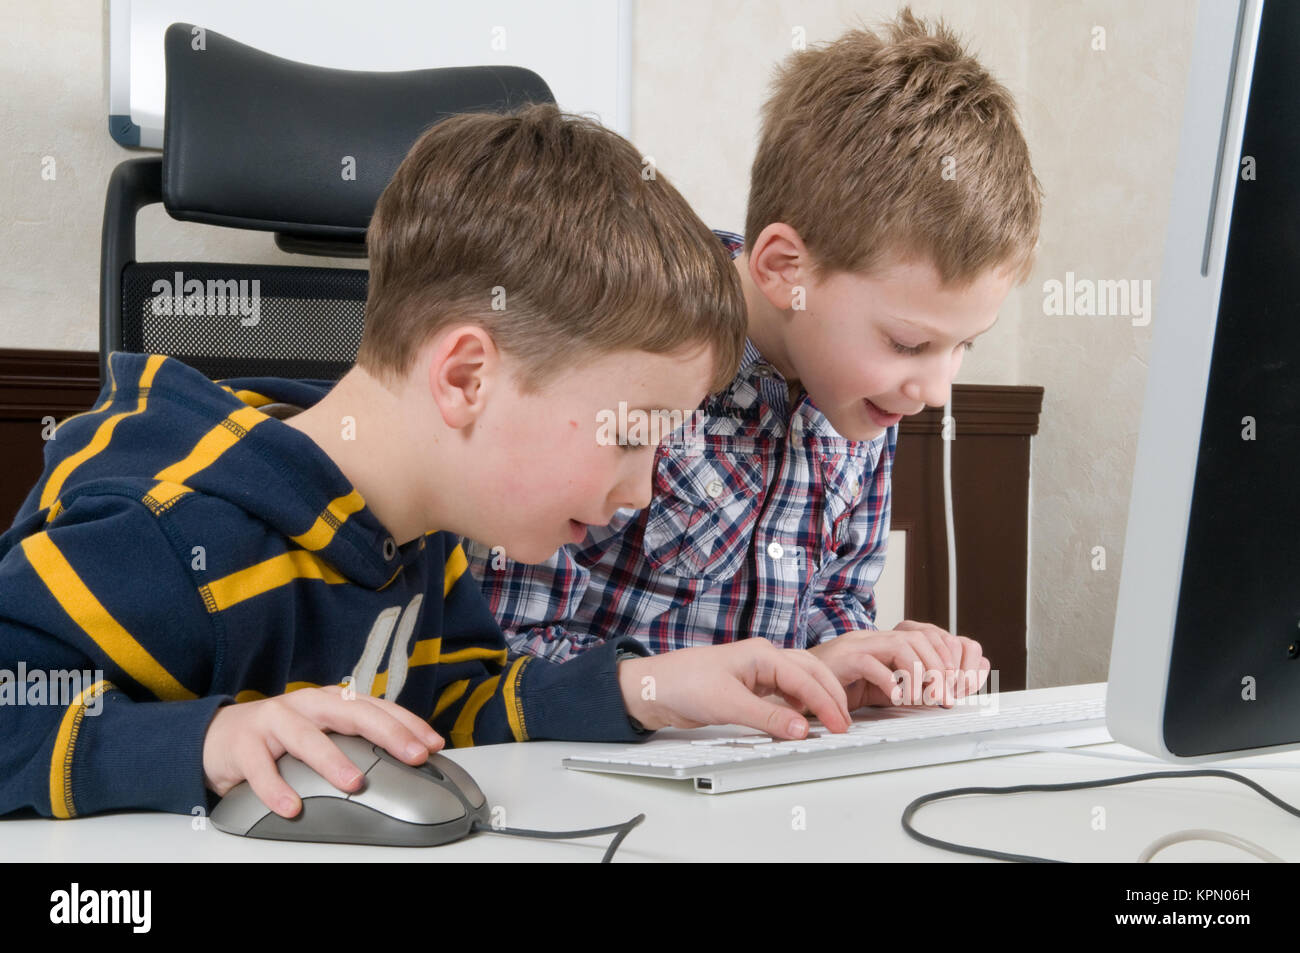 Boys on a computer Stock Photo